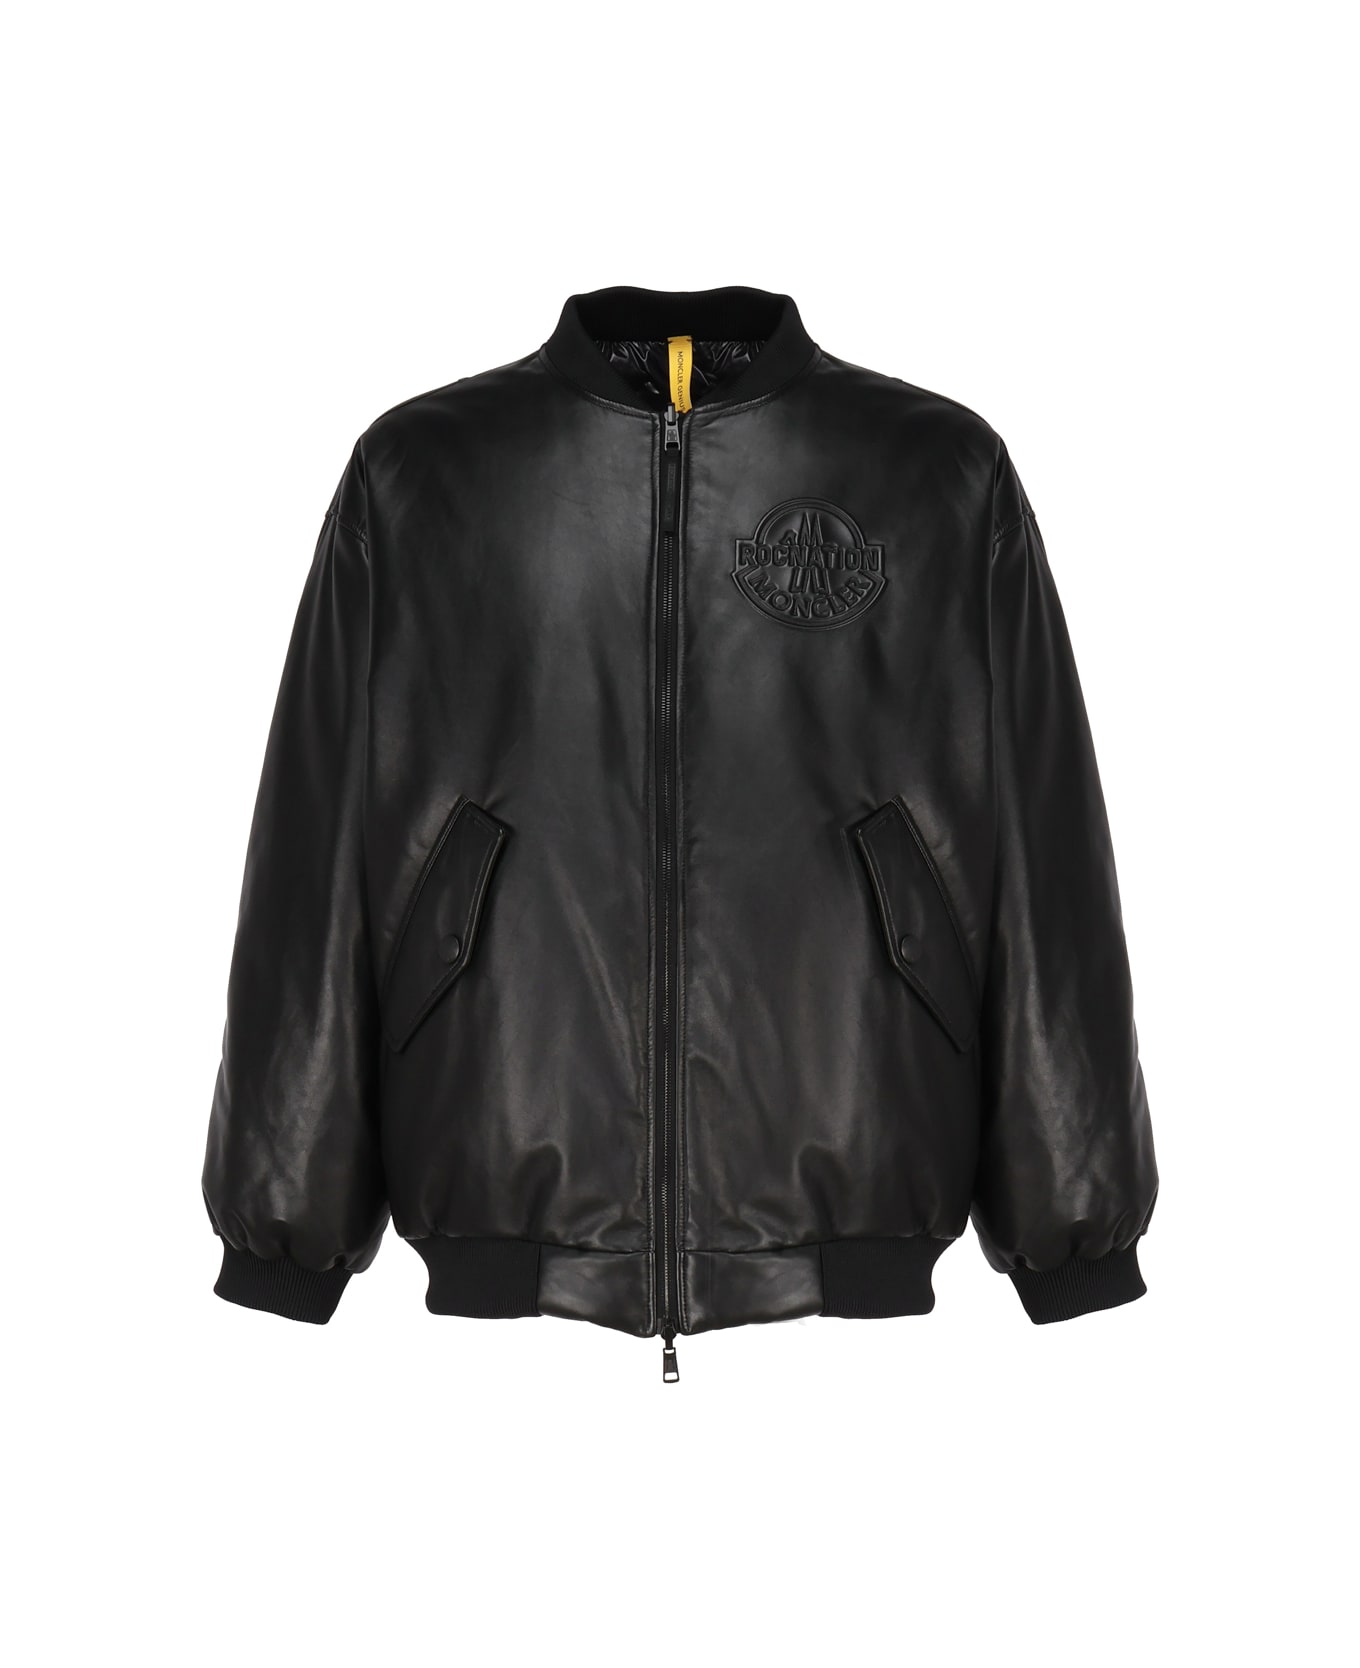 Moncler Genius Reversible Leather Jacket - Black レザージャケット